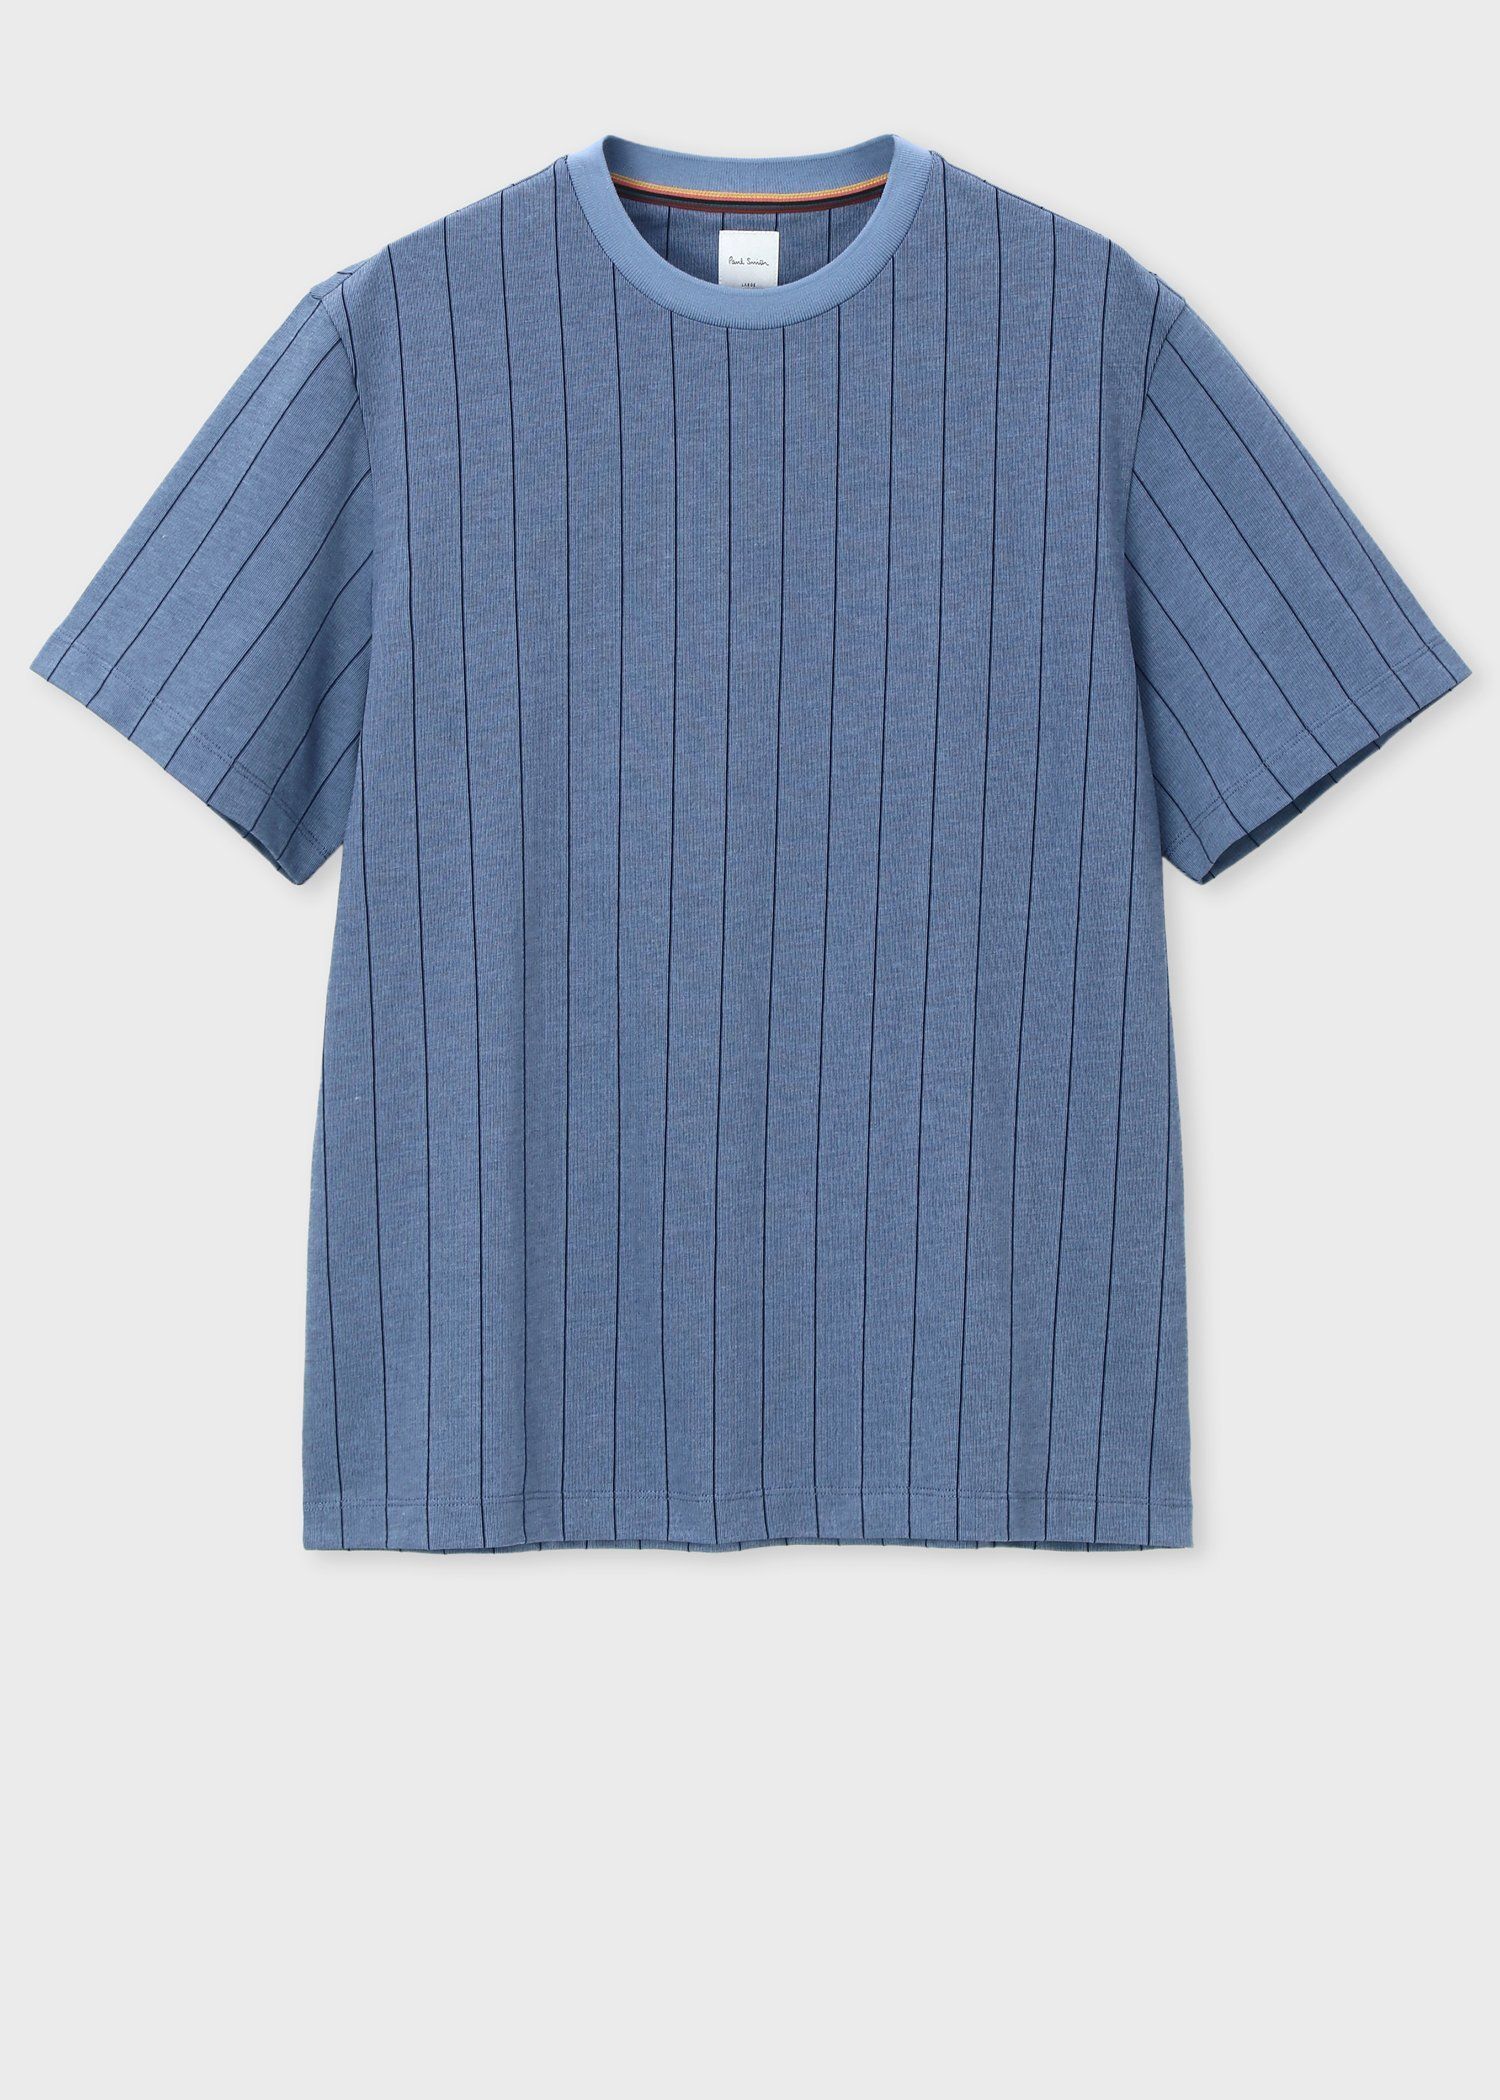 "Jacquard Stripe" 半袖Tシャツ